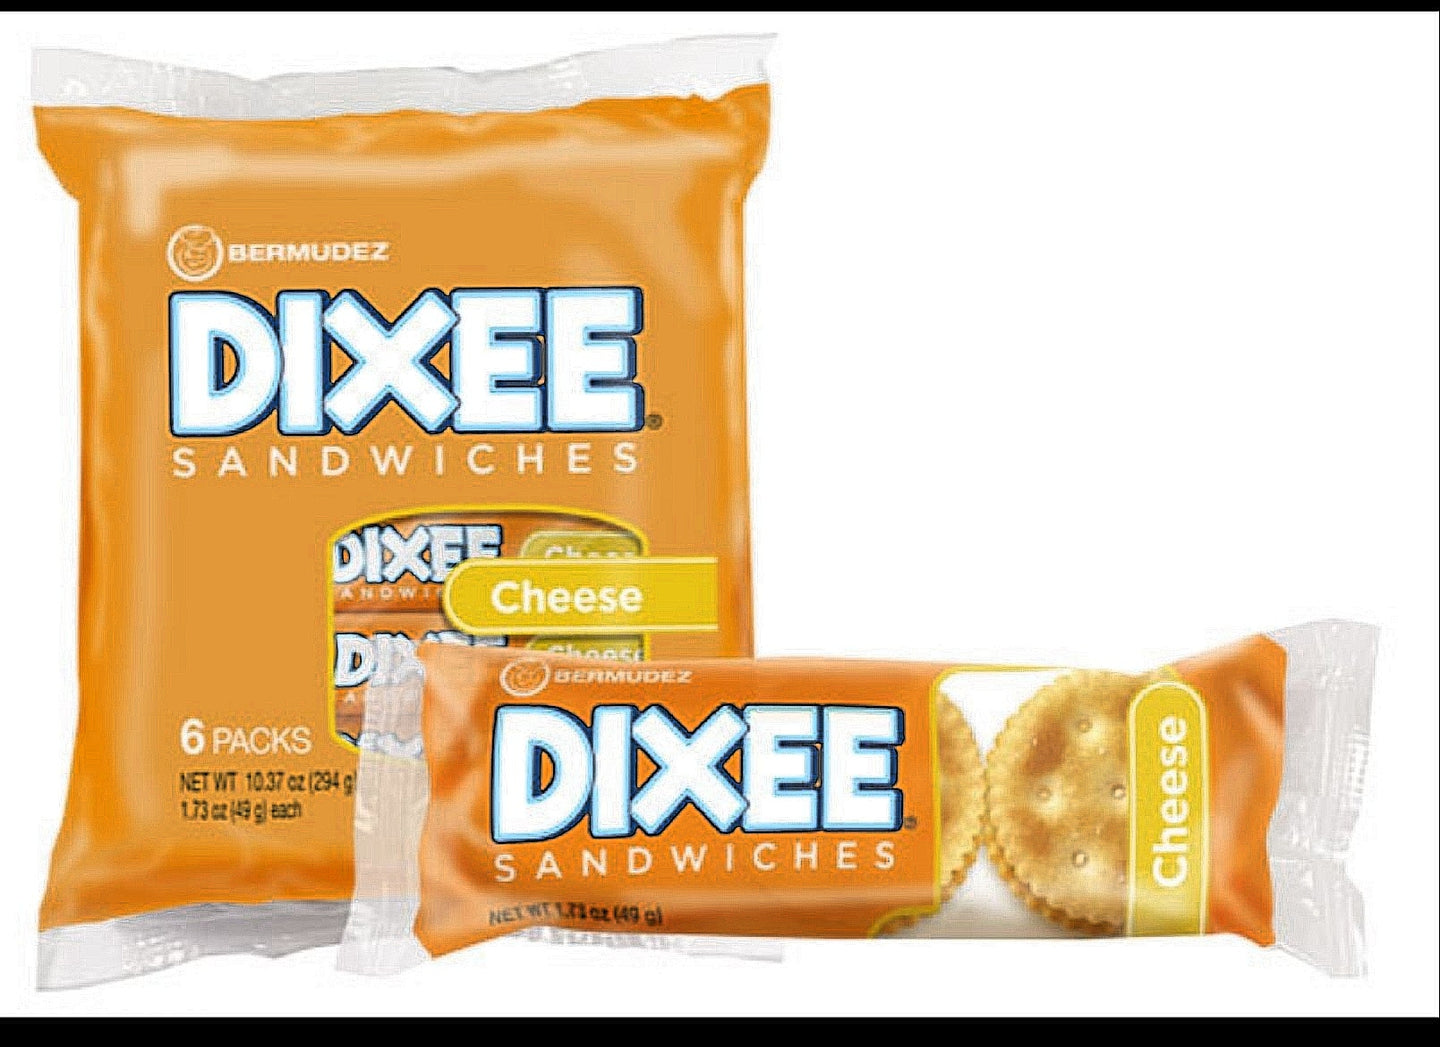 Dixee Sandwich Biscuits (single)